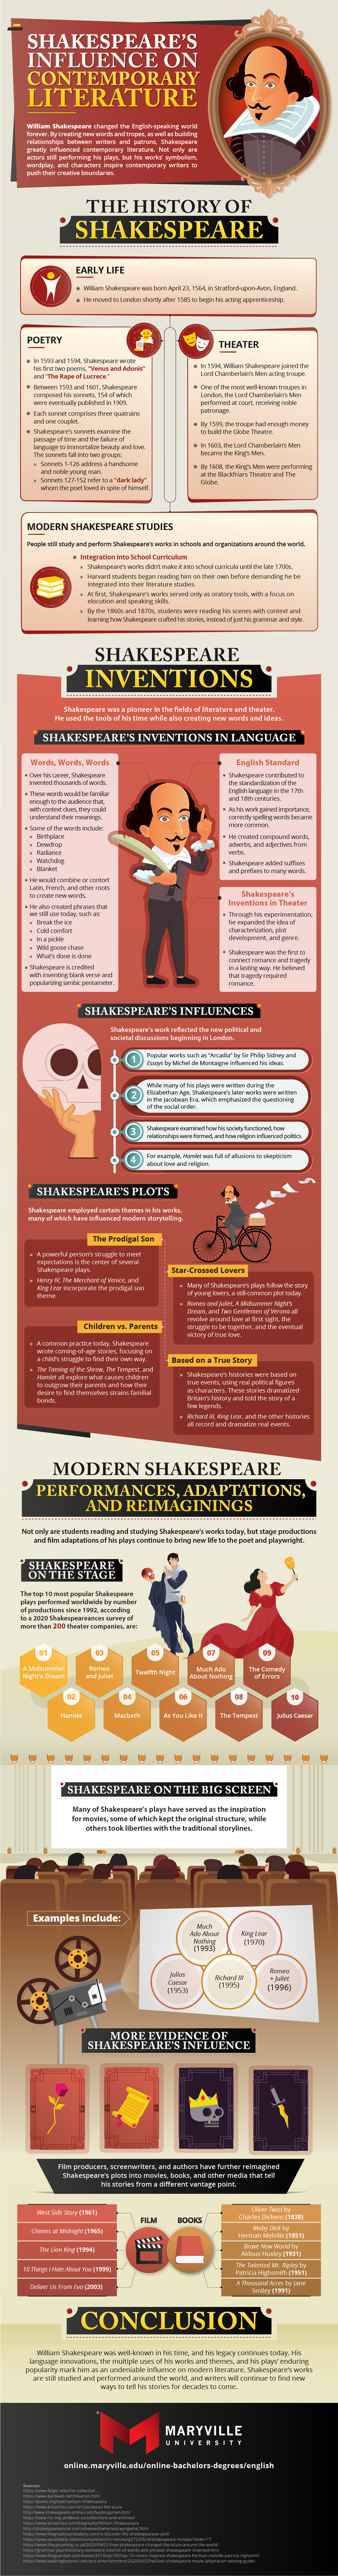 How William Shakespeare has influenced modern literature.